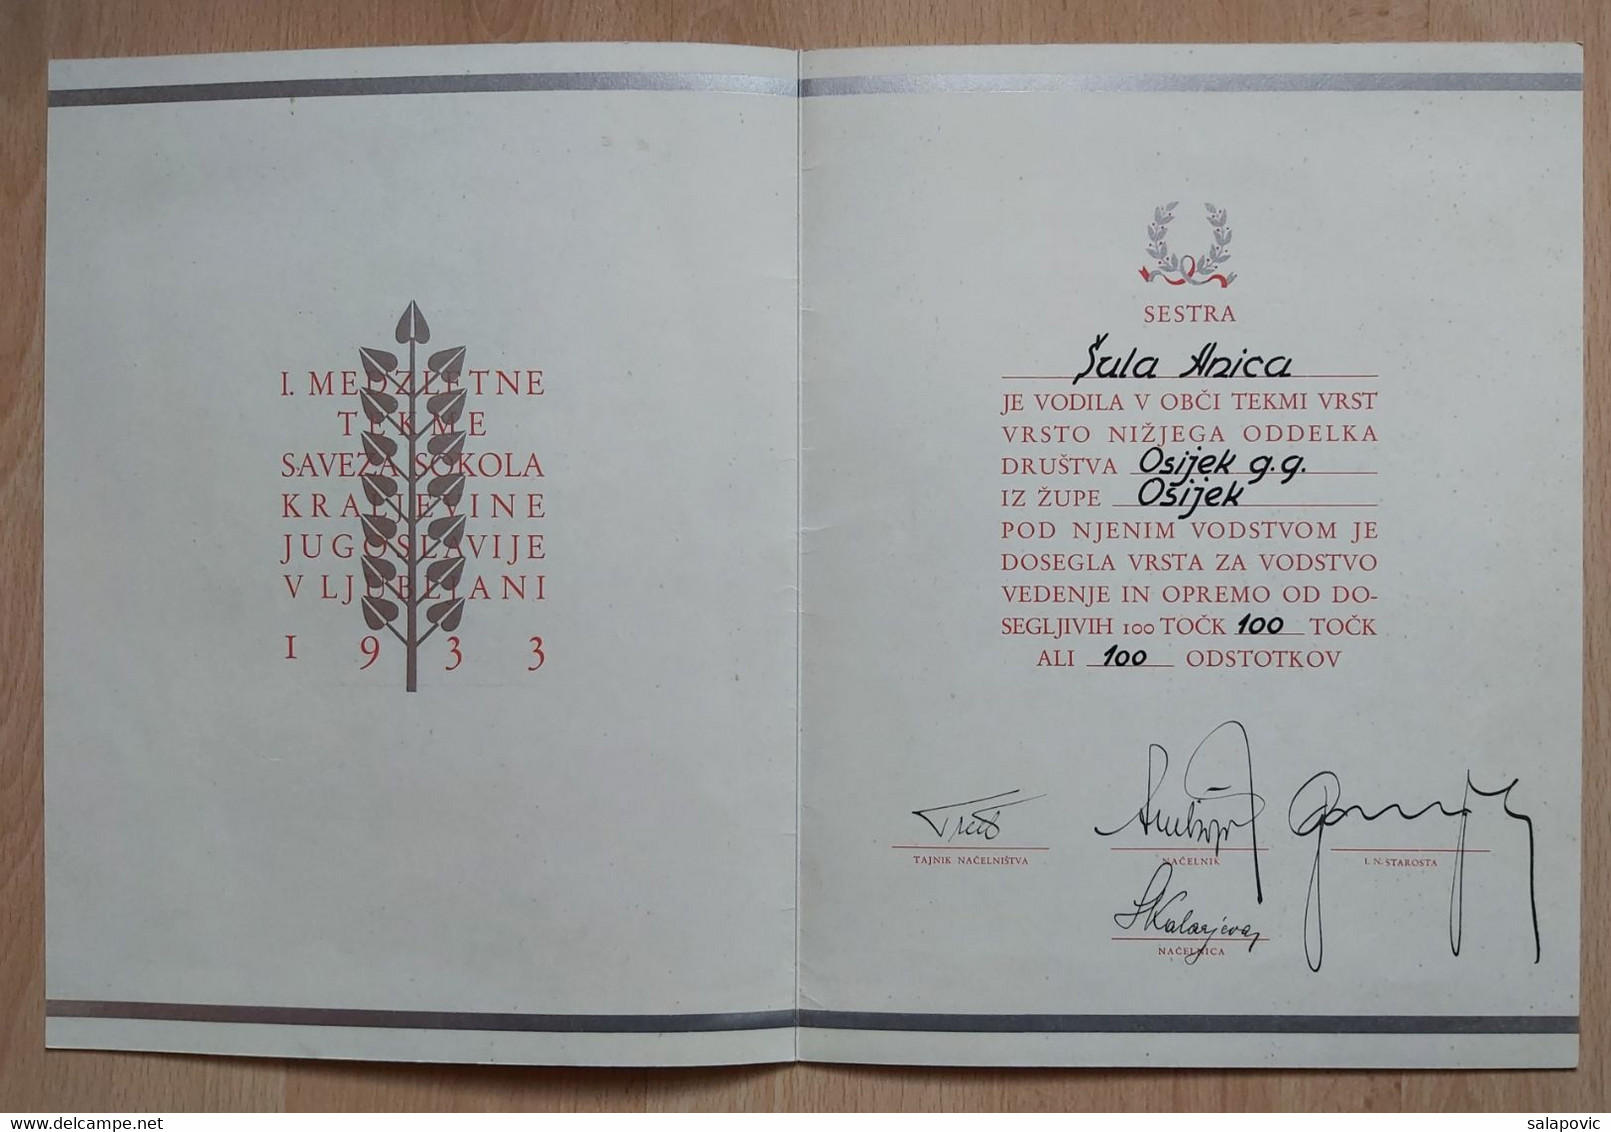 Sokol, Kingdom Of Yugislavia Ljubljana, Slovenia1933  Certificate - Gymnastiek